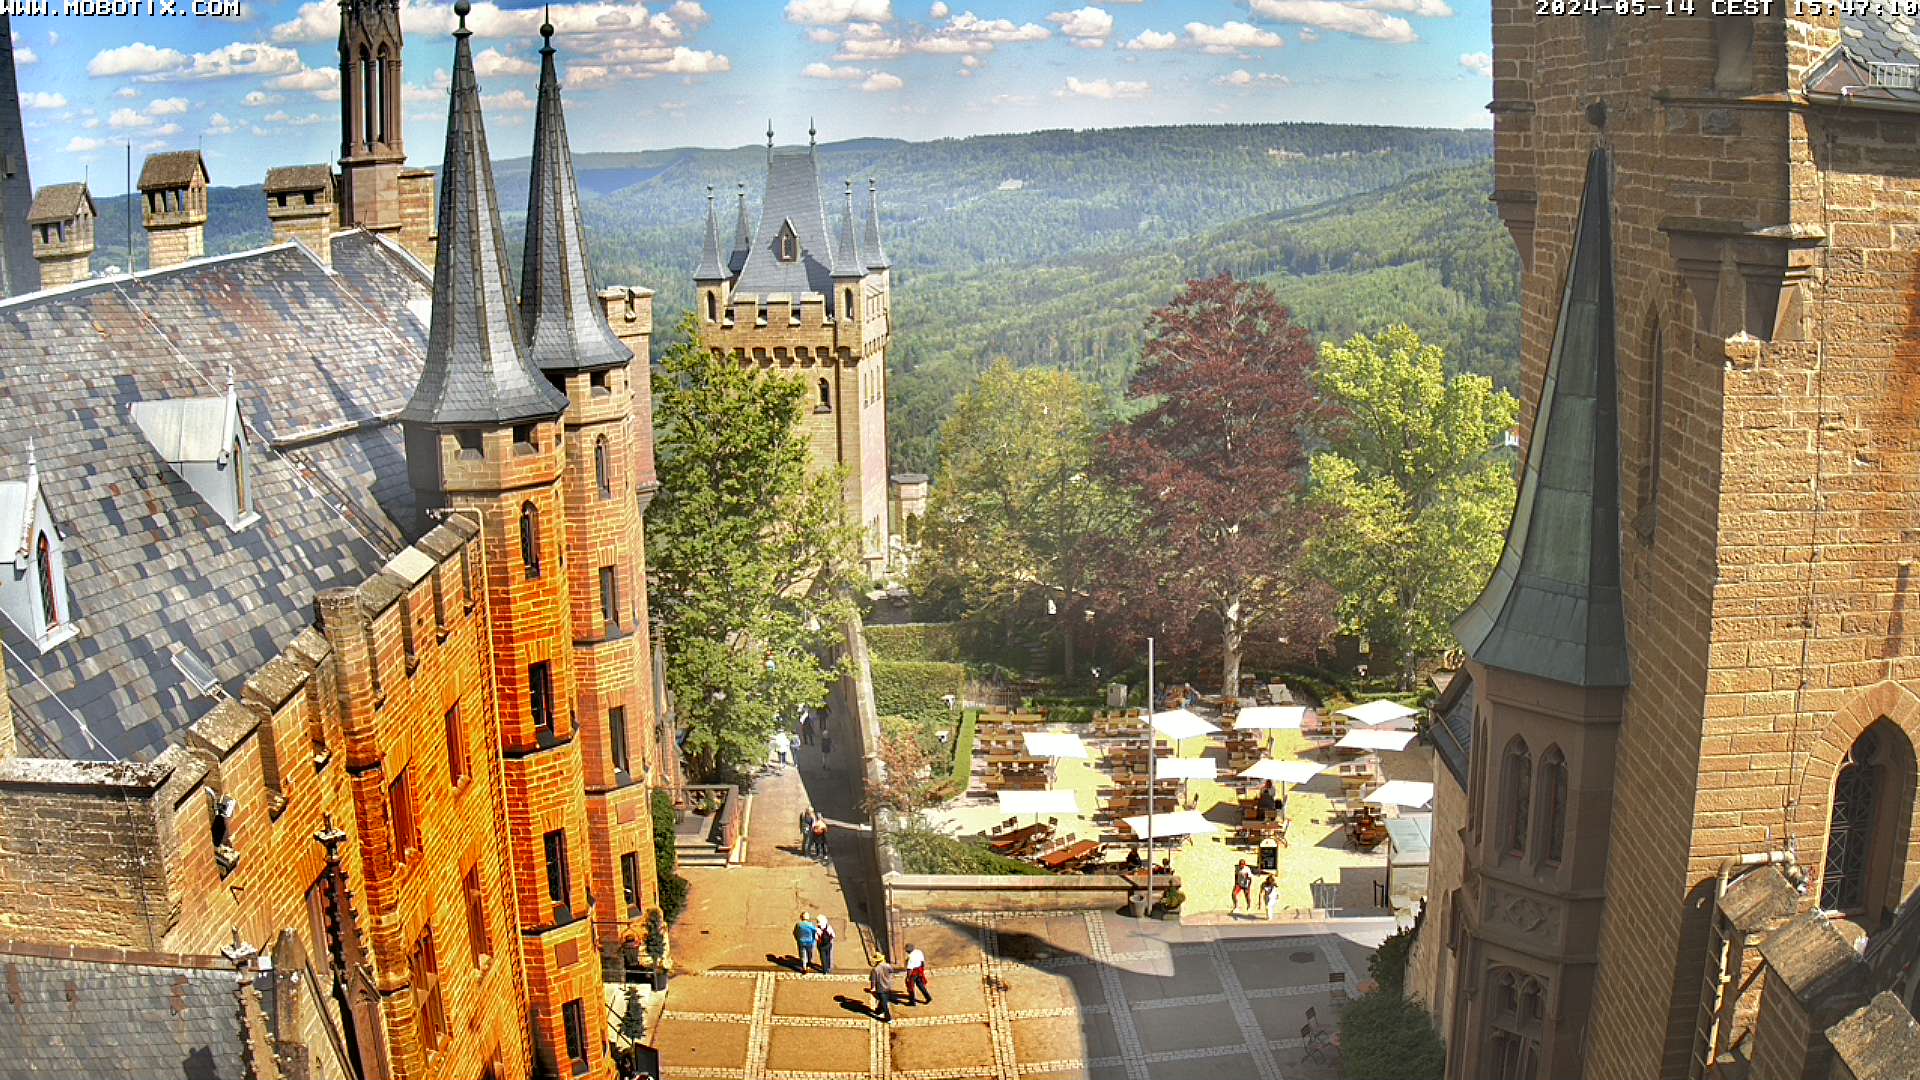 Burg Hohenzollern Thu. 15:50